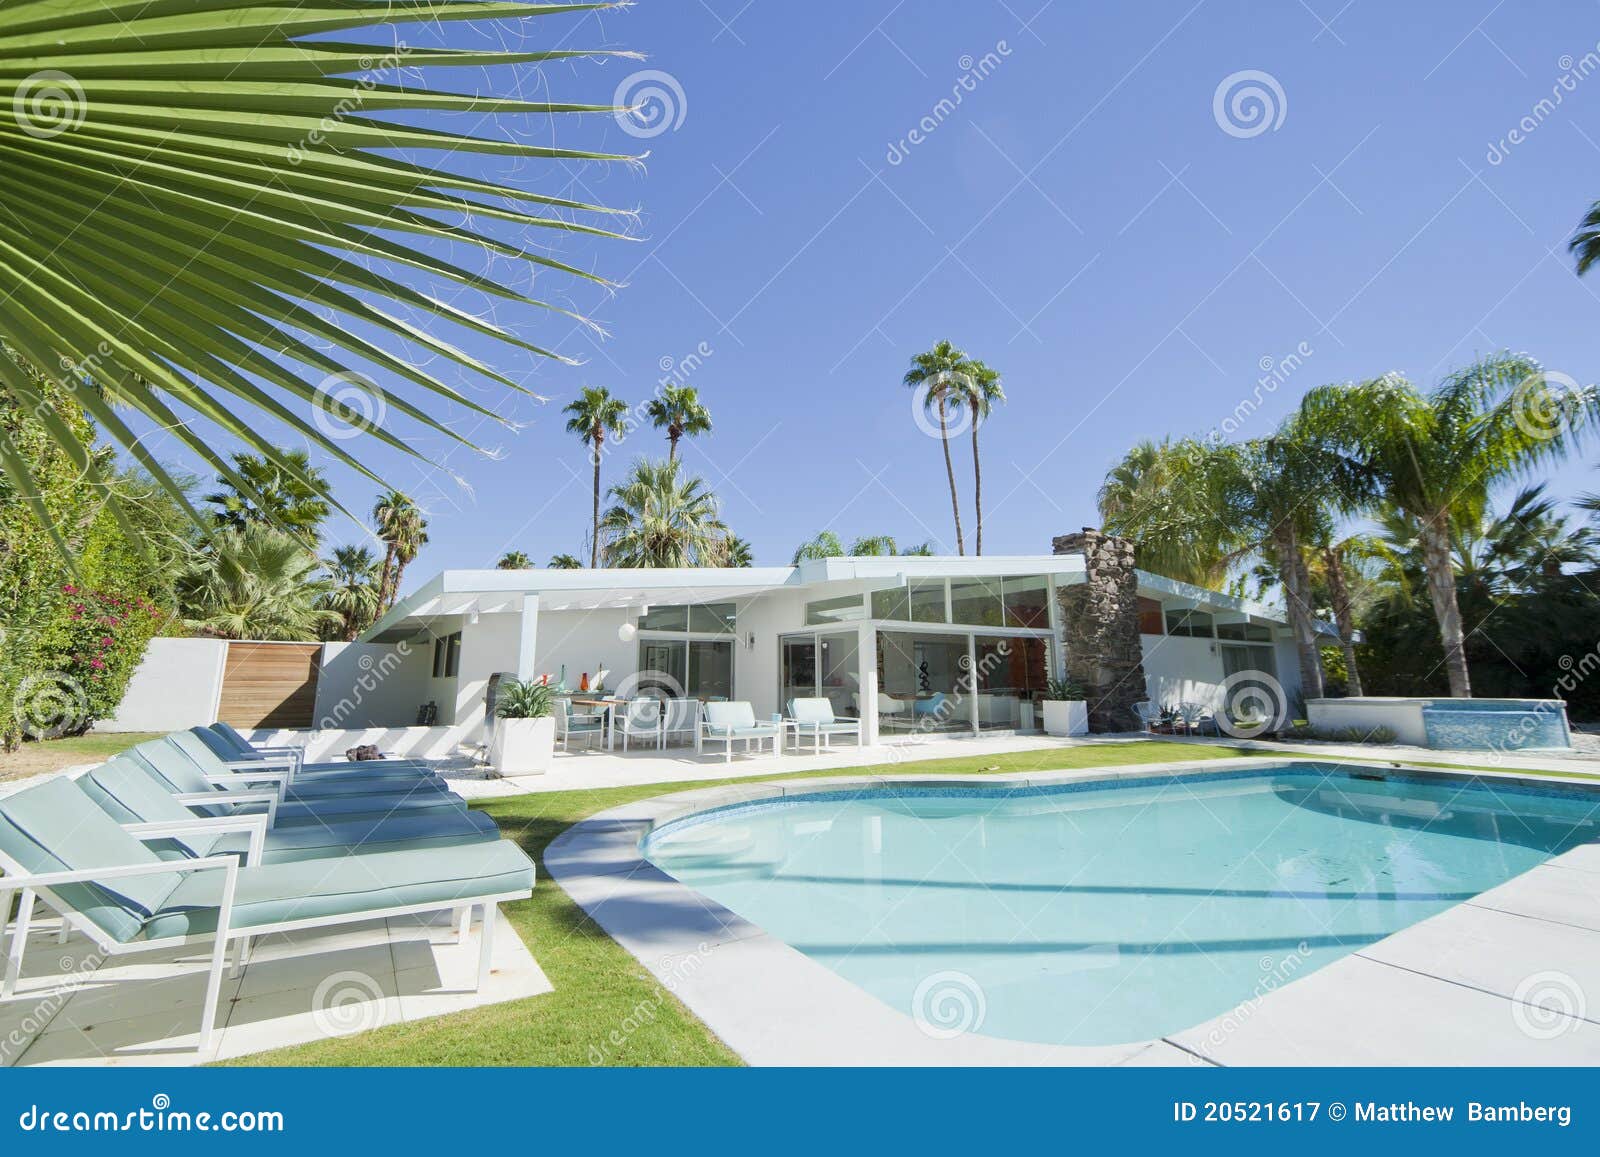 palm springs swimming pool